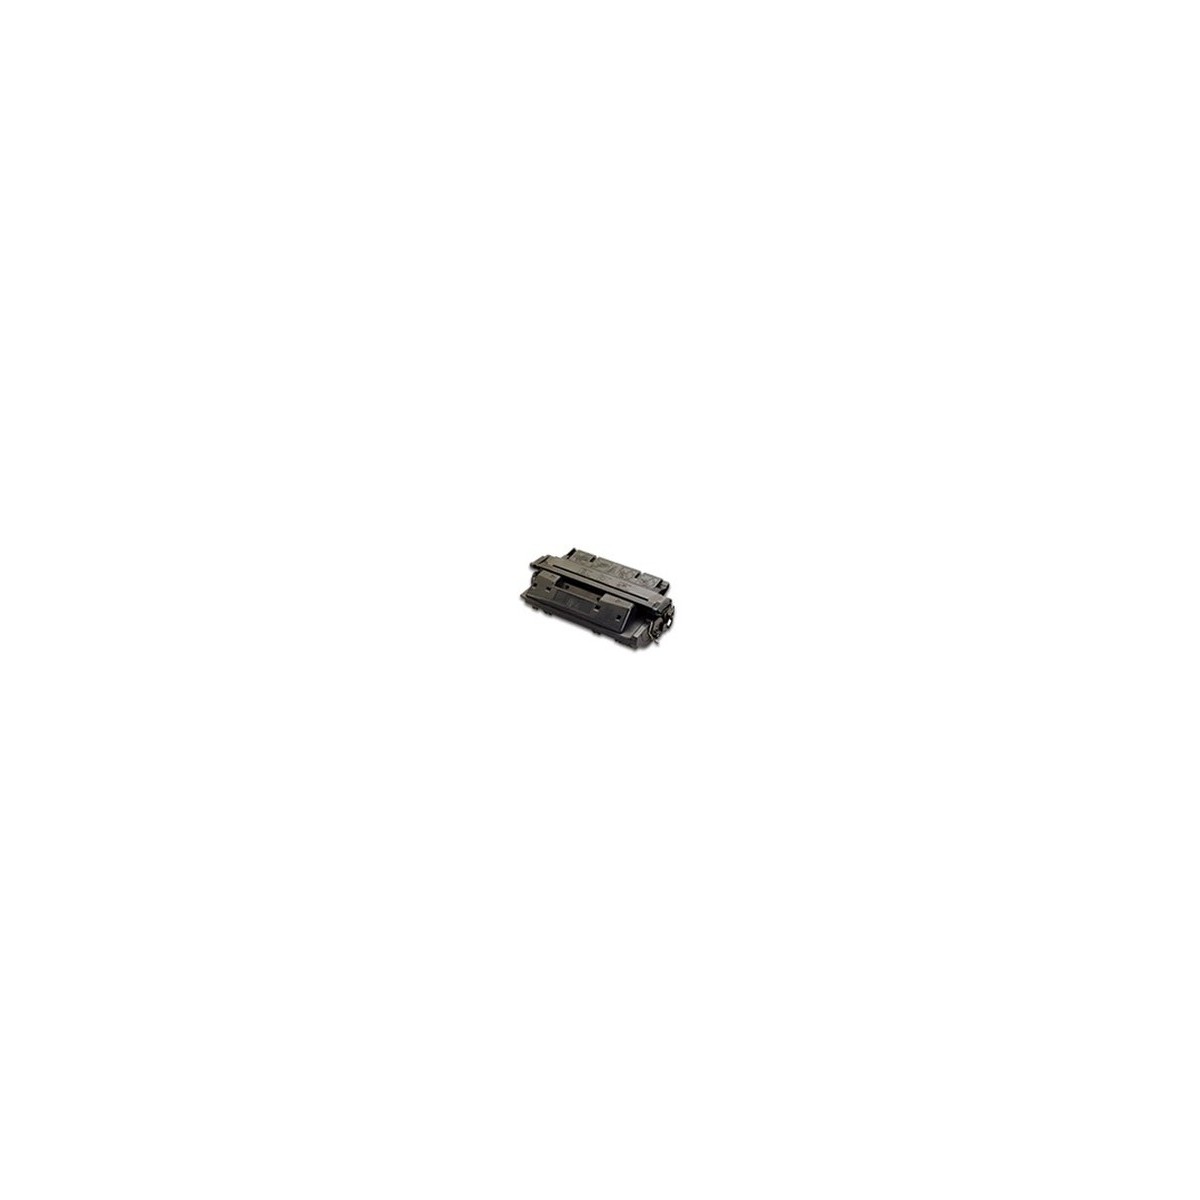 Brother Toner Cartridge for HL-2460 - 11000 pages - Black